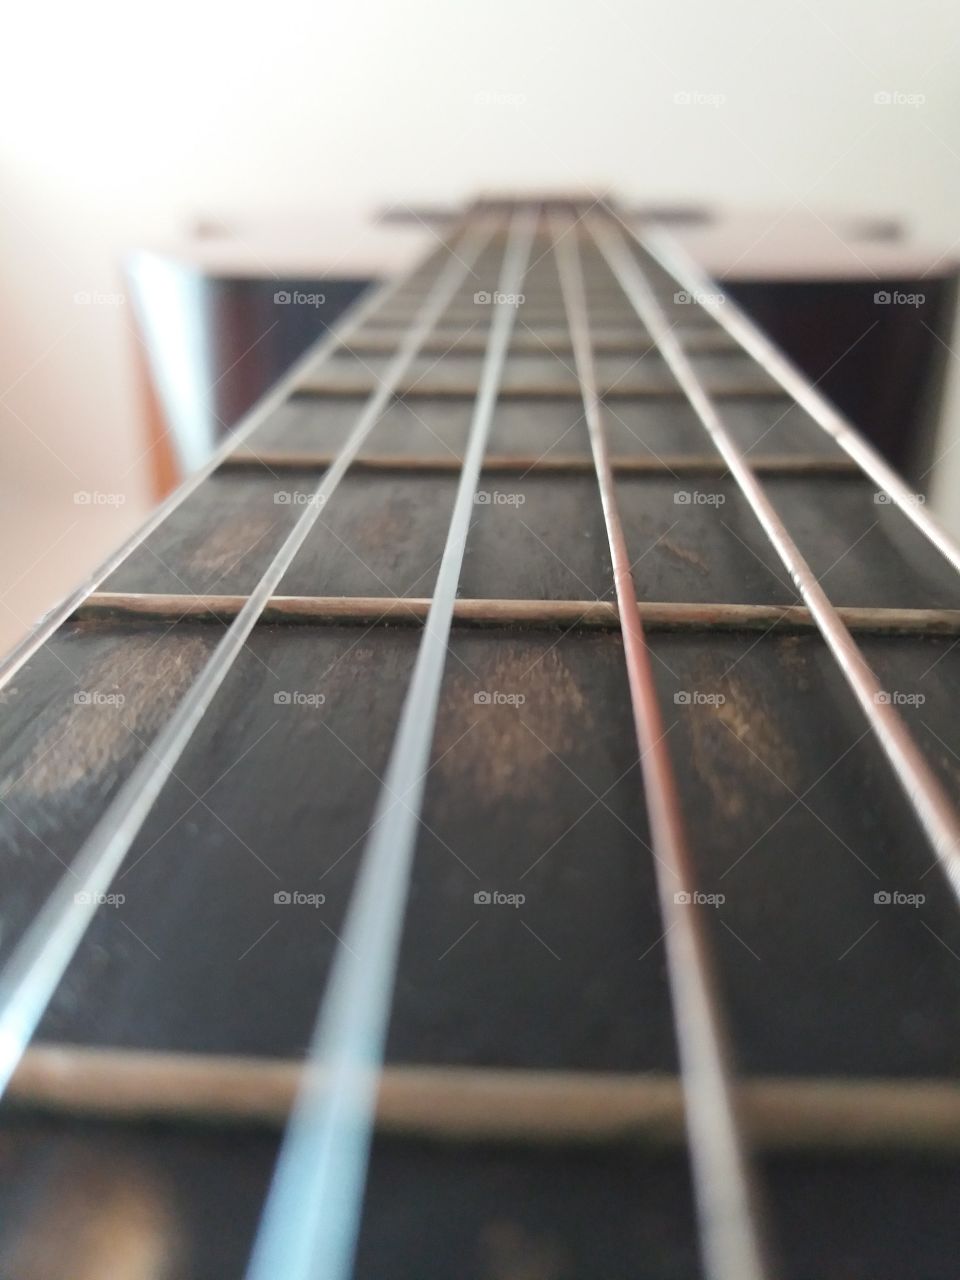 guitar chord